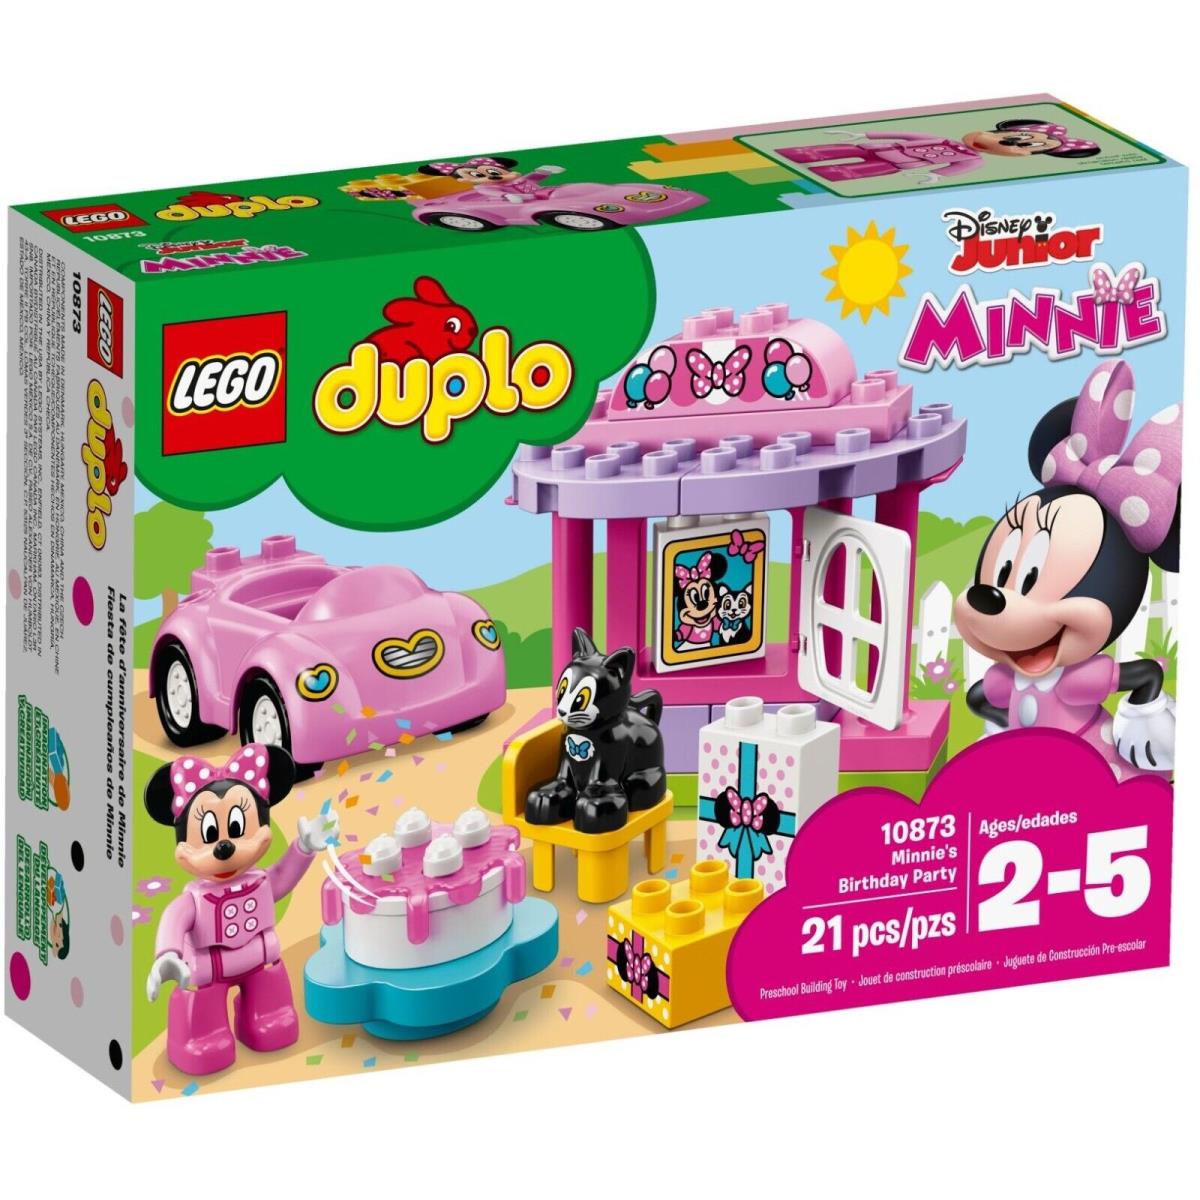 Lego Disney Junior Duplo 10873 Minnie Mouse Birthday Set Retired